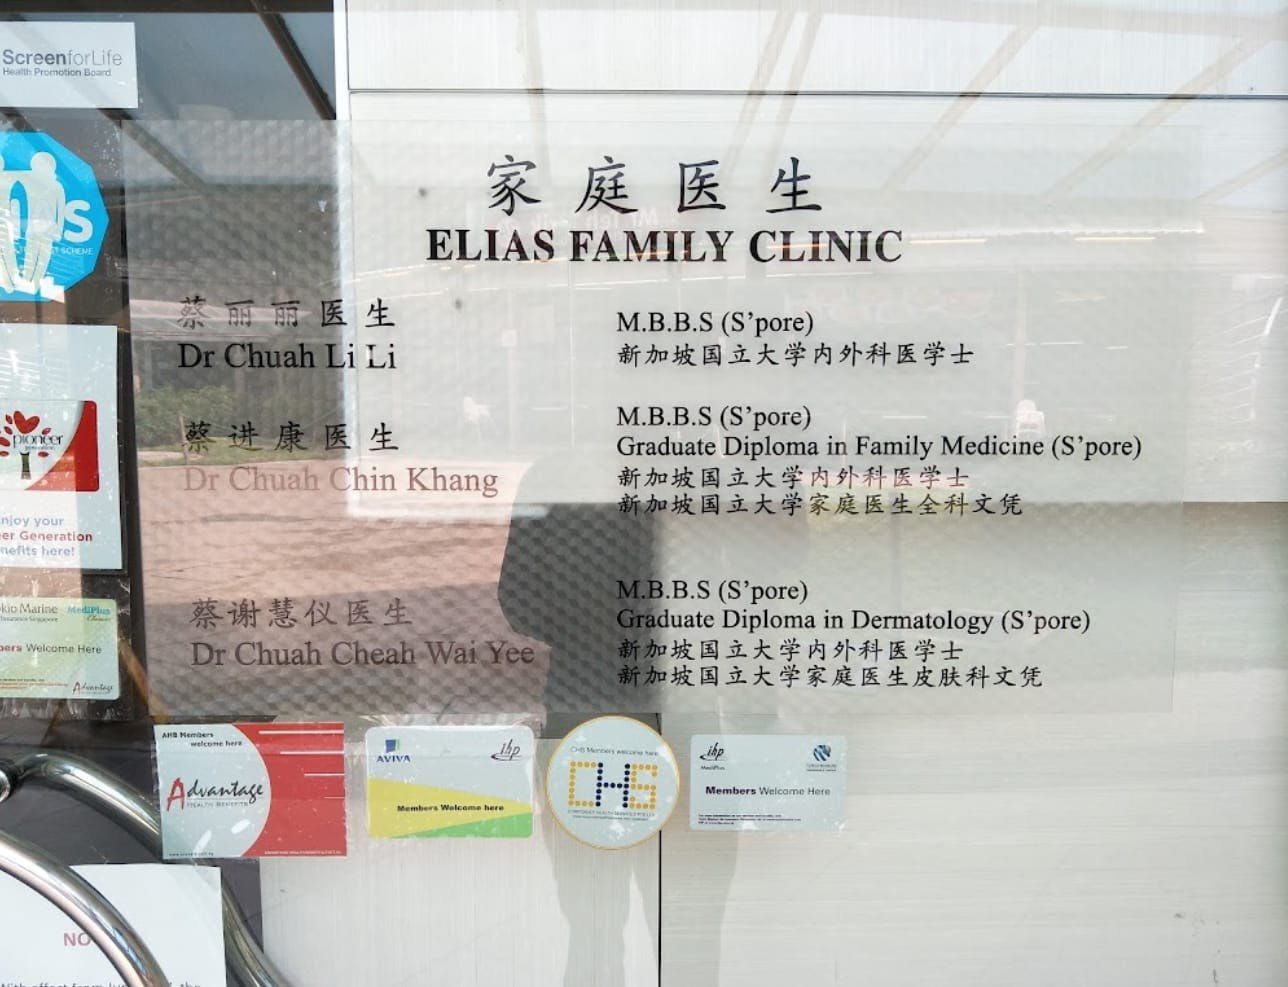 Elias Family Clinic & Surgery